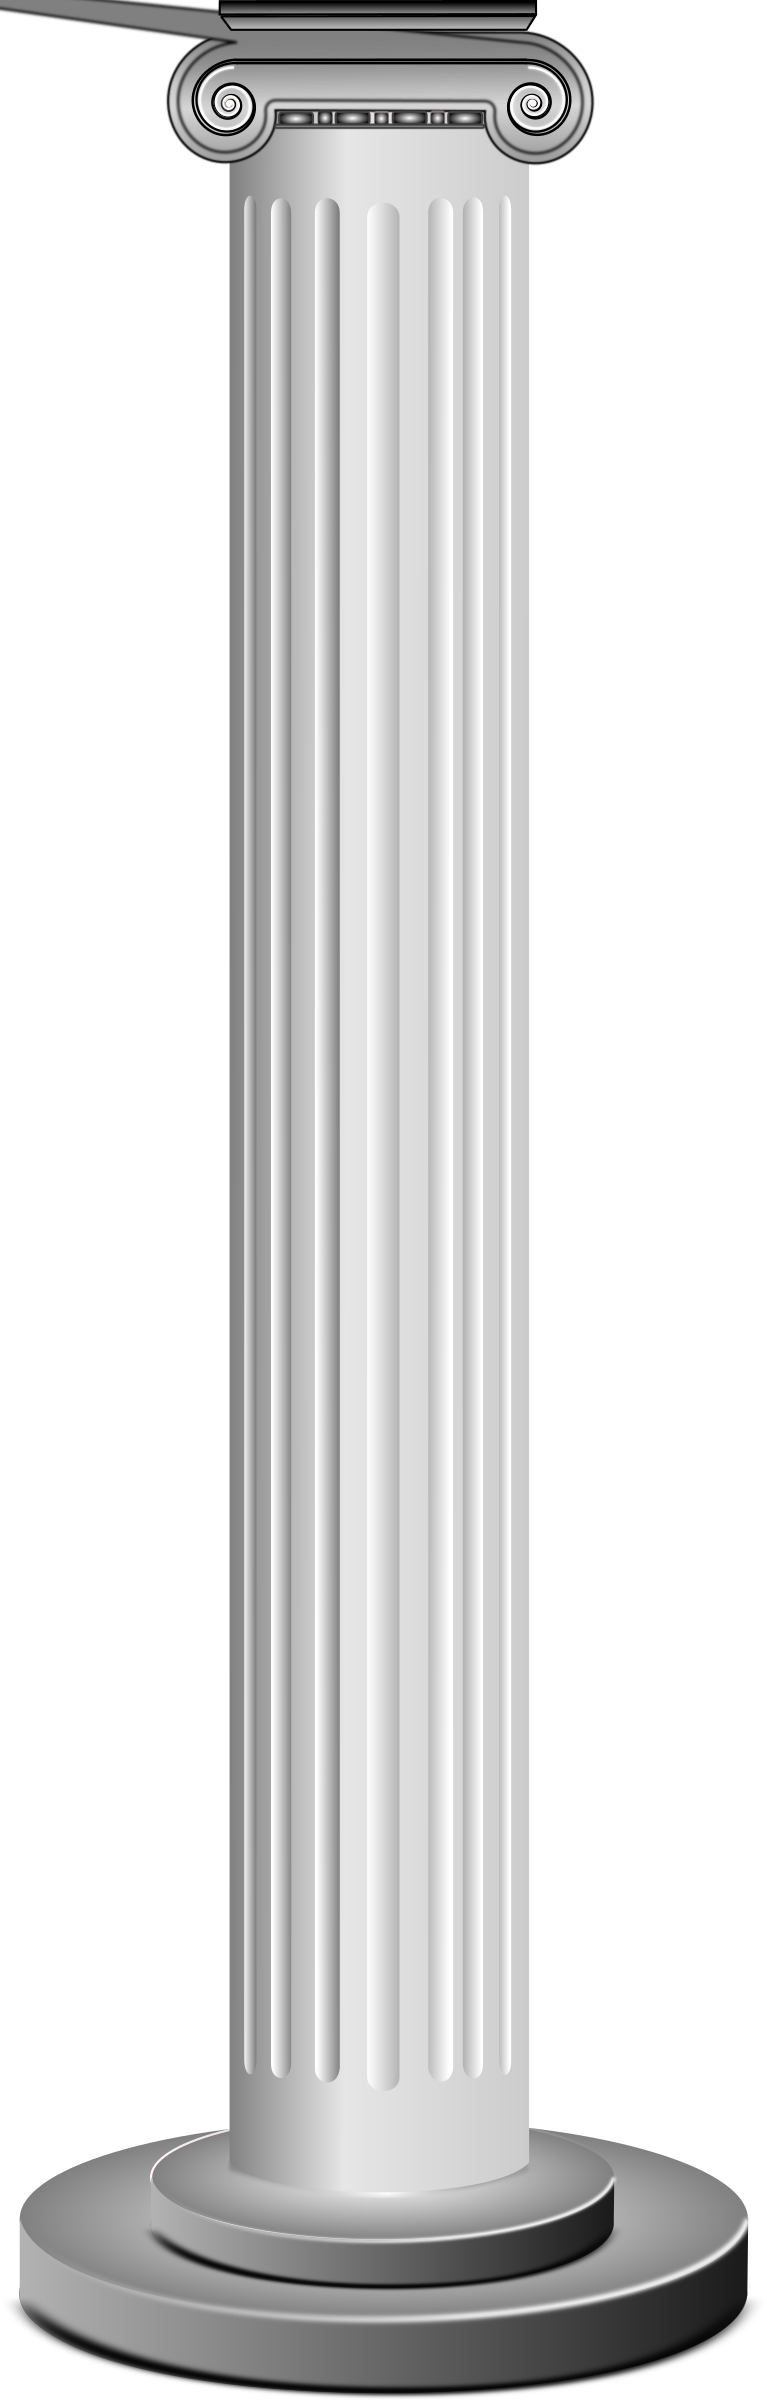 column clipart different